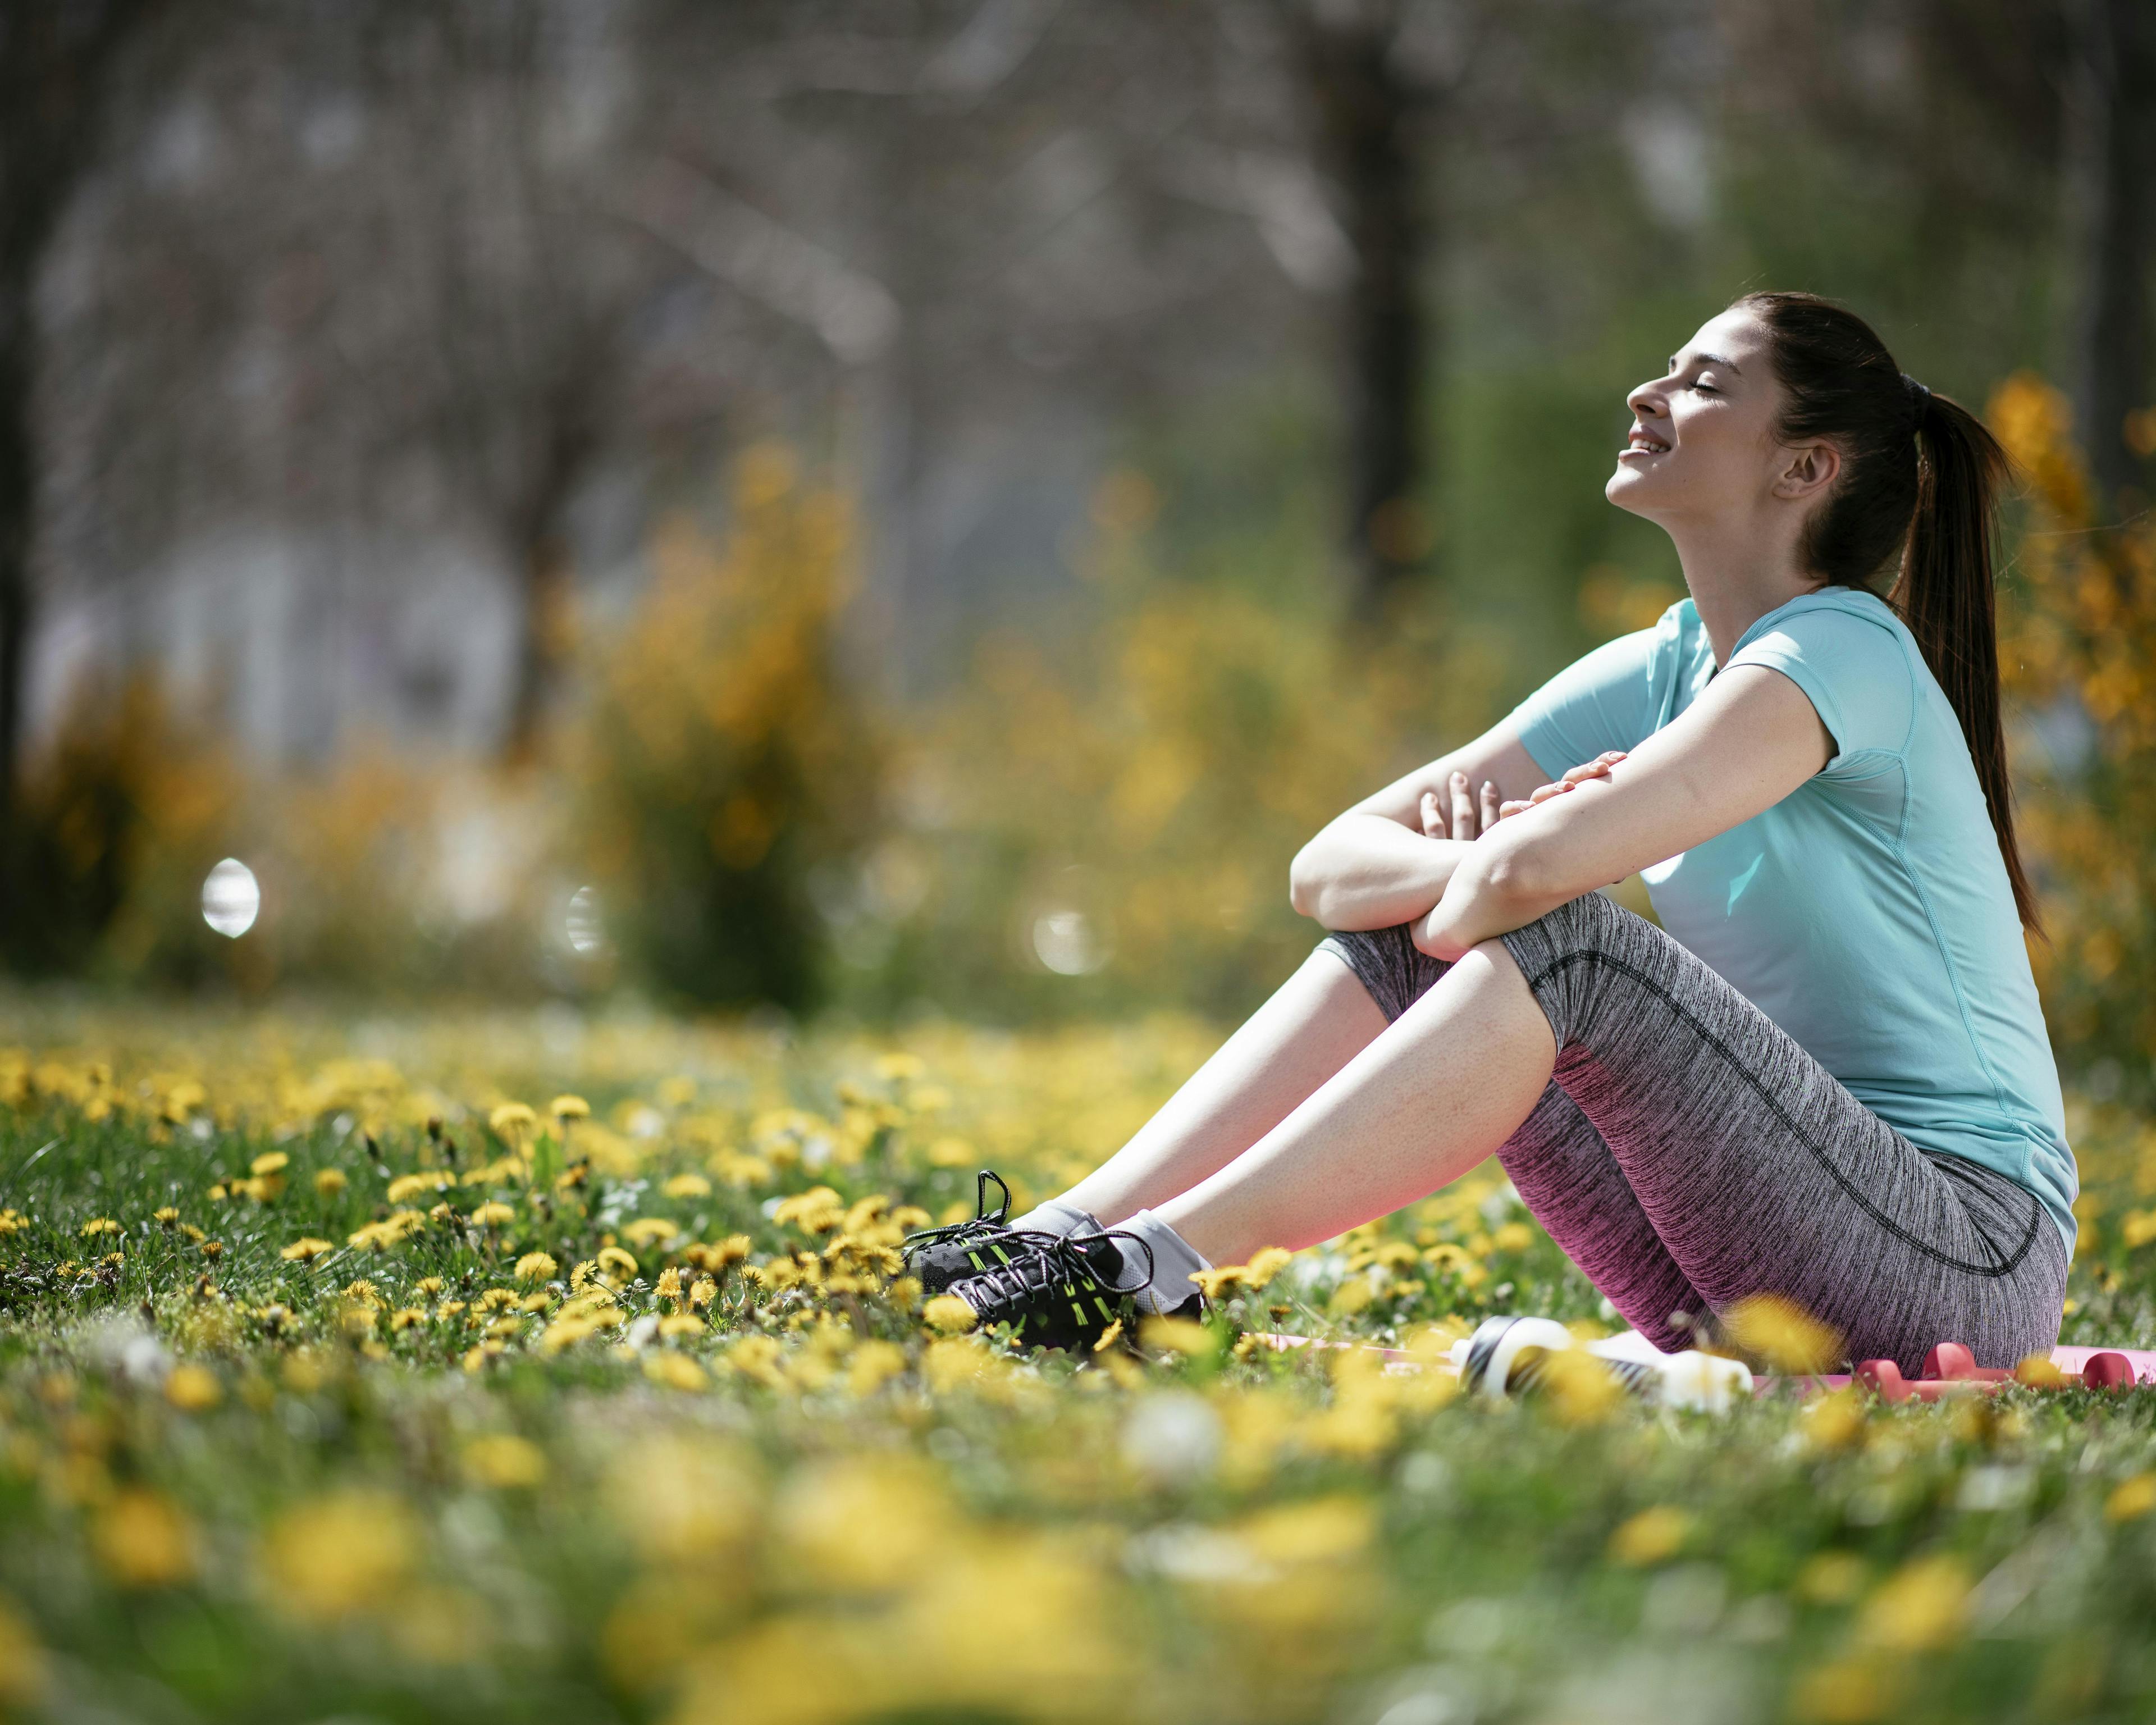 Endometriosis daily exercise Yoga in the park Health and wellness 1292788926.jpg